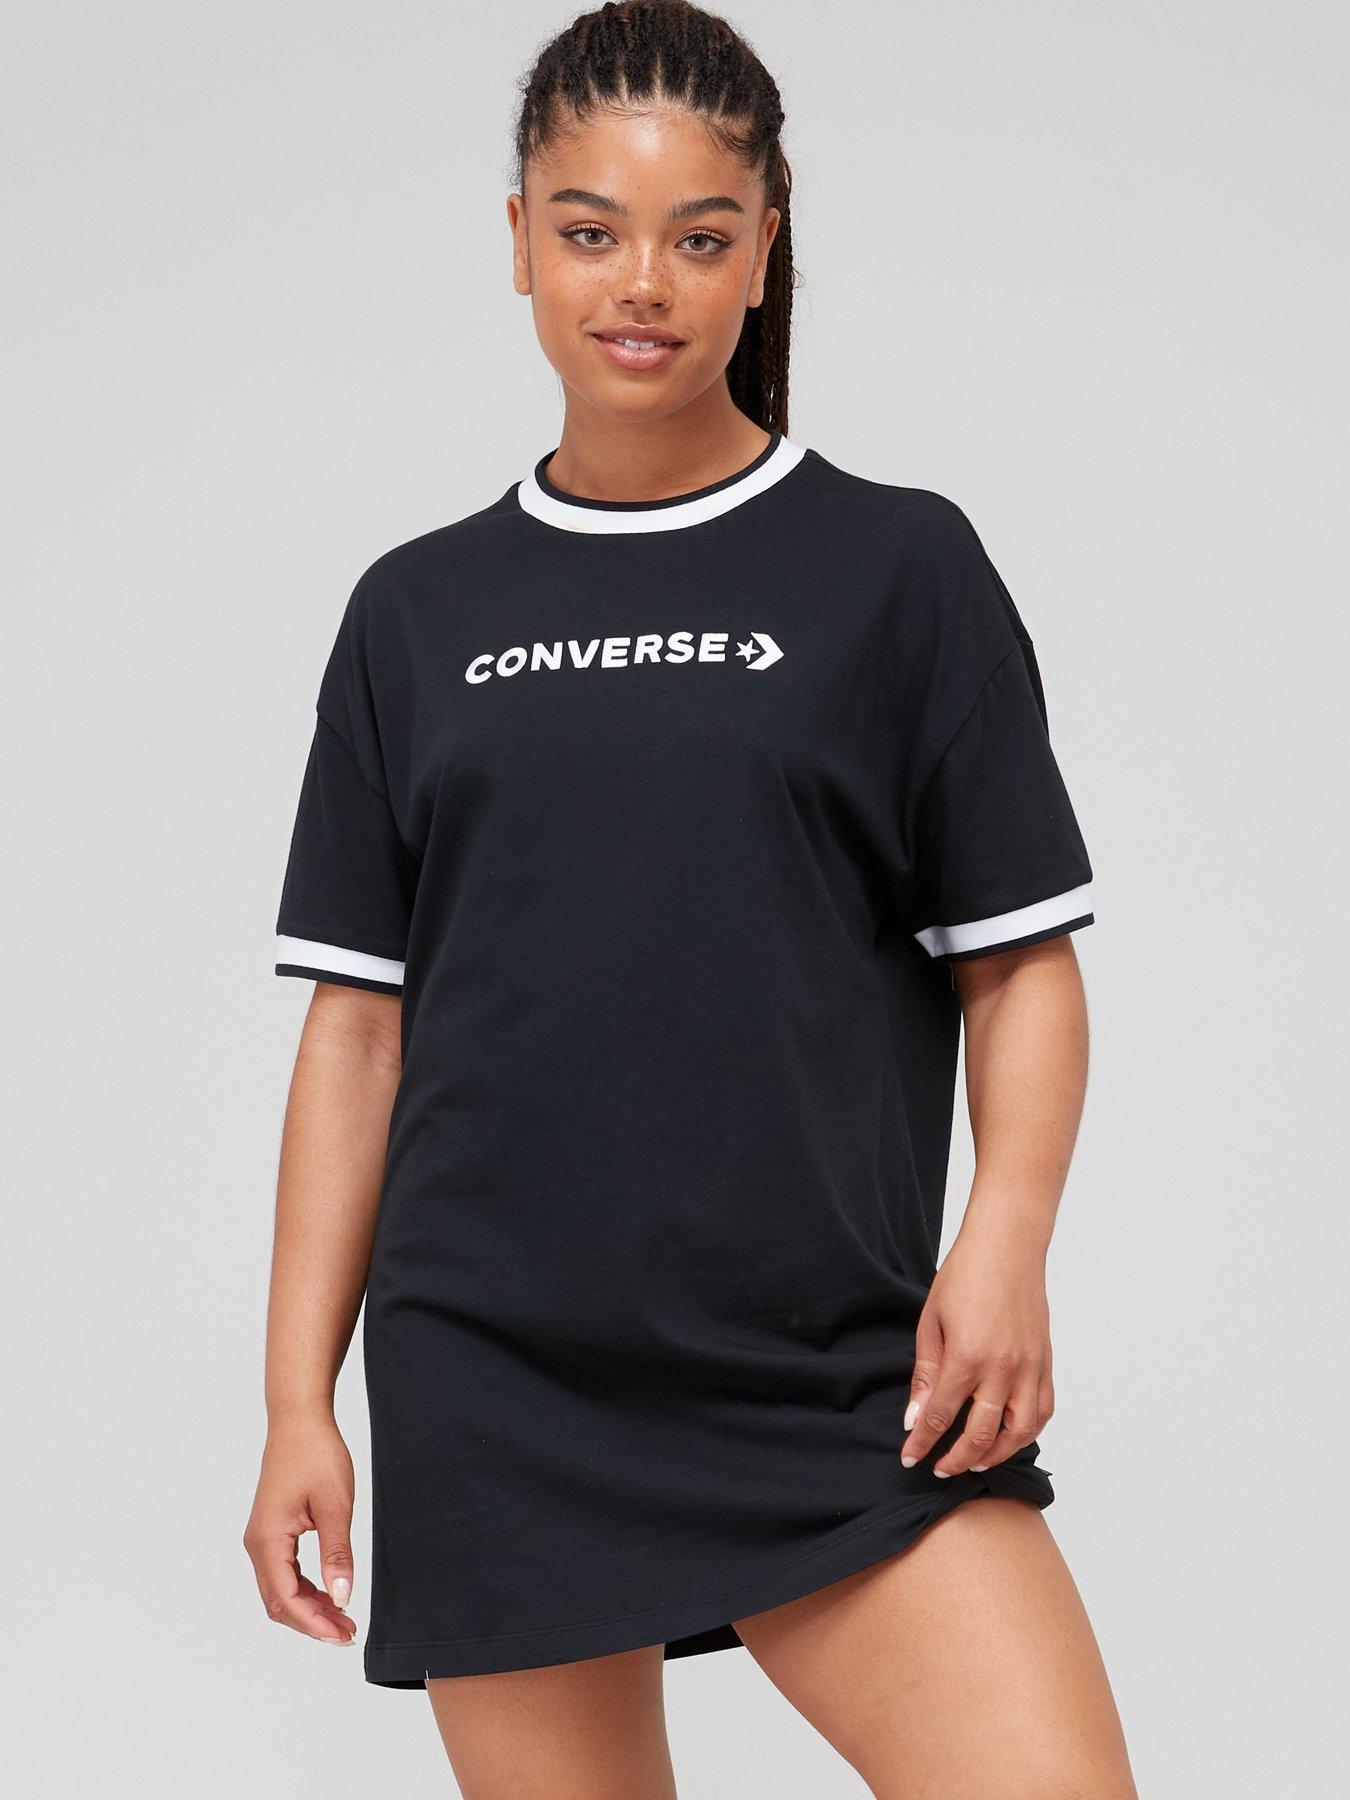 Black Wordmark Converse T-Shirt Dress -